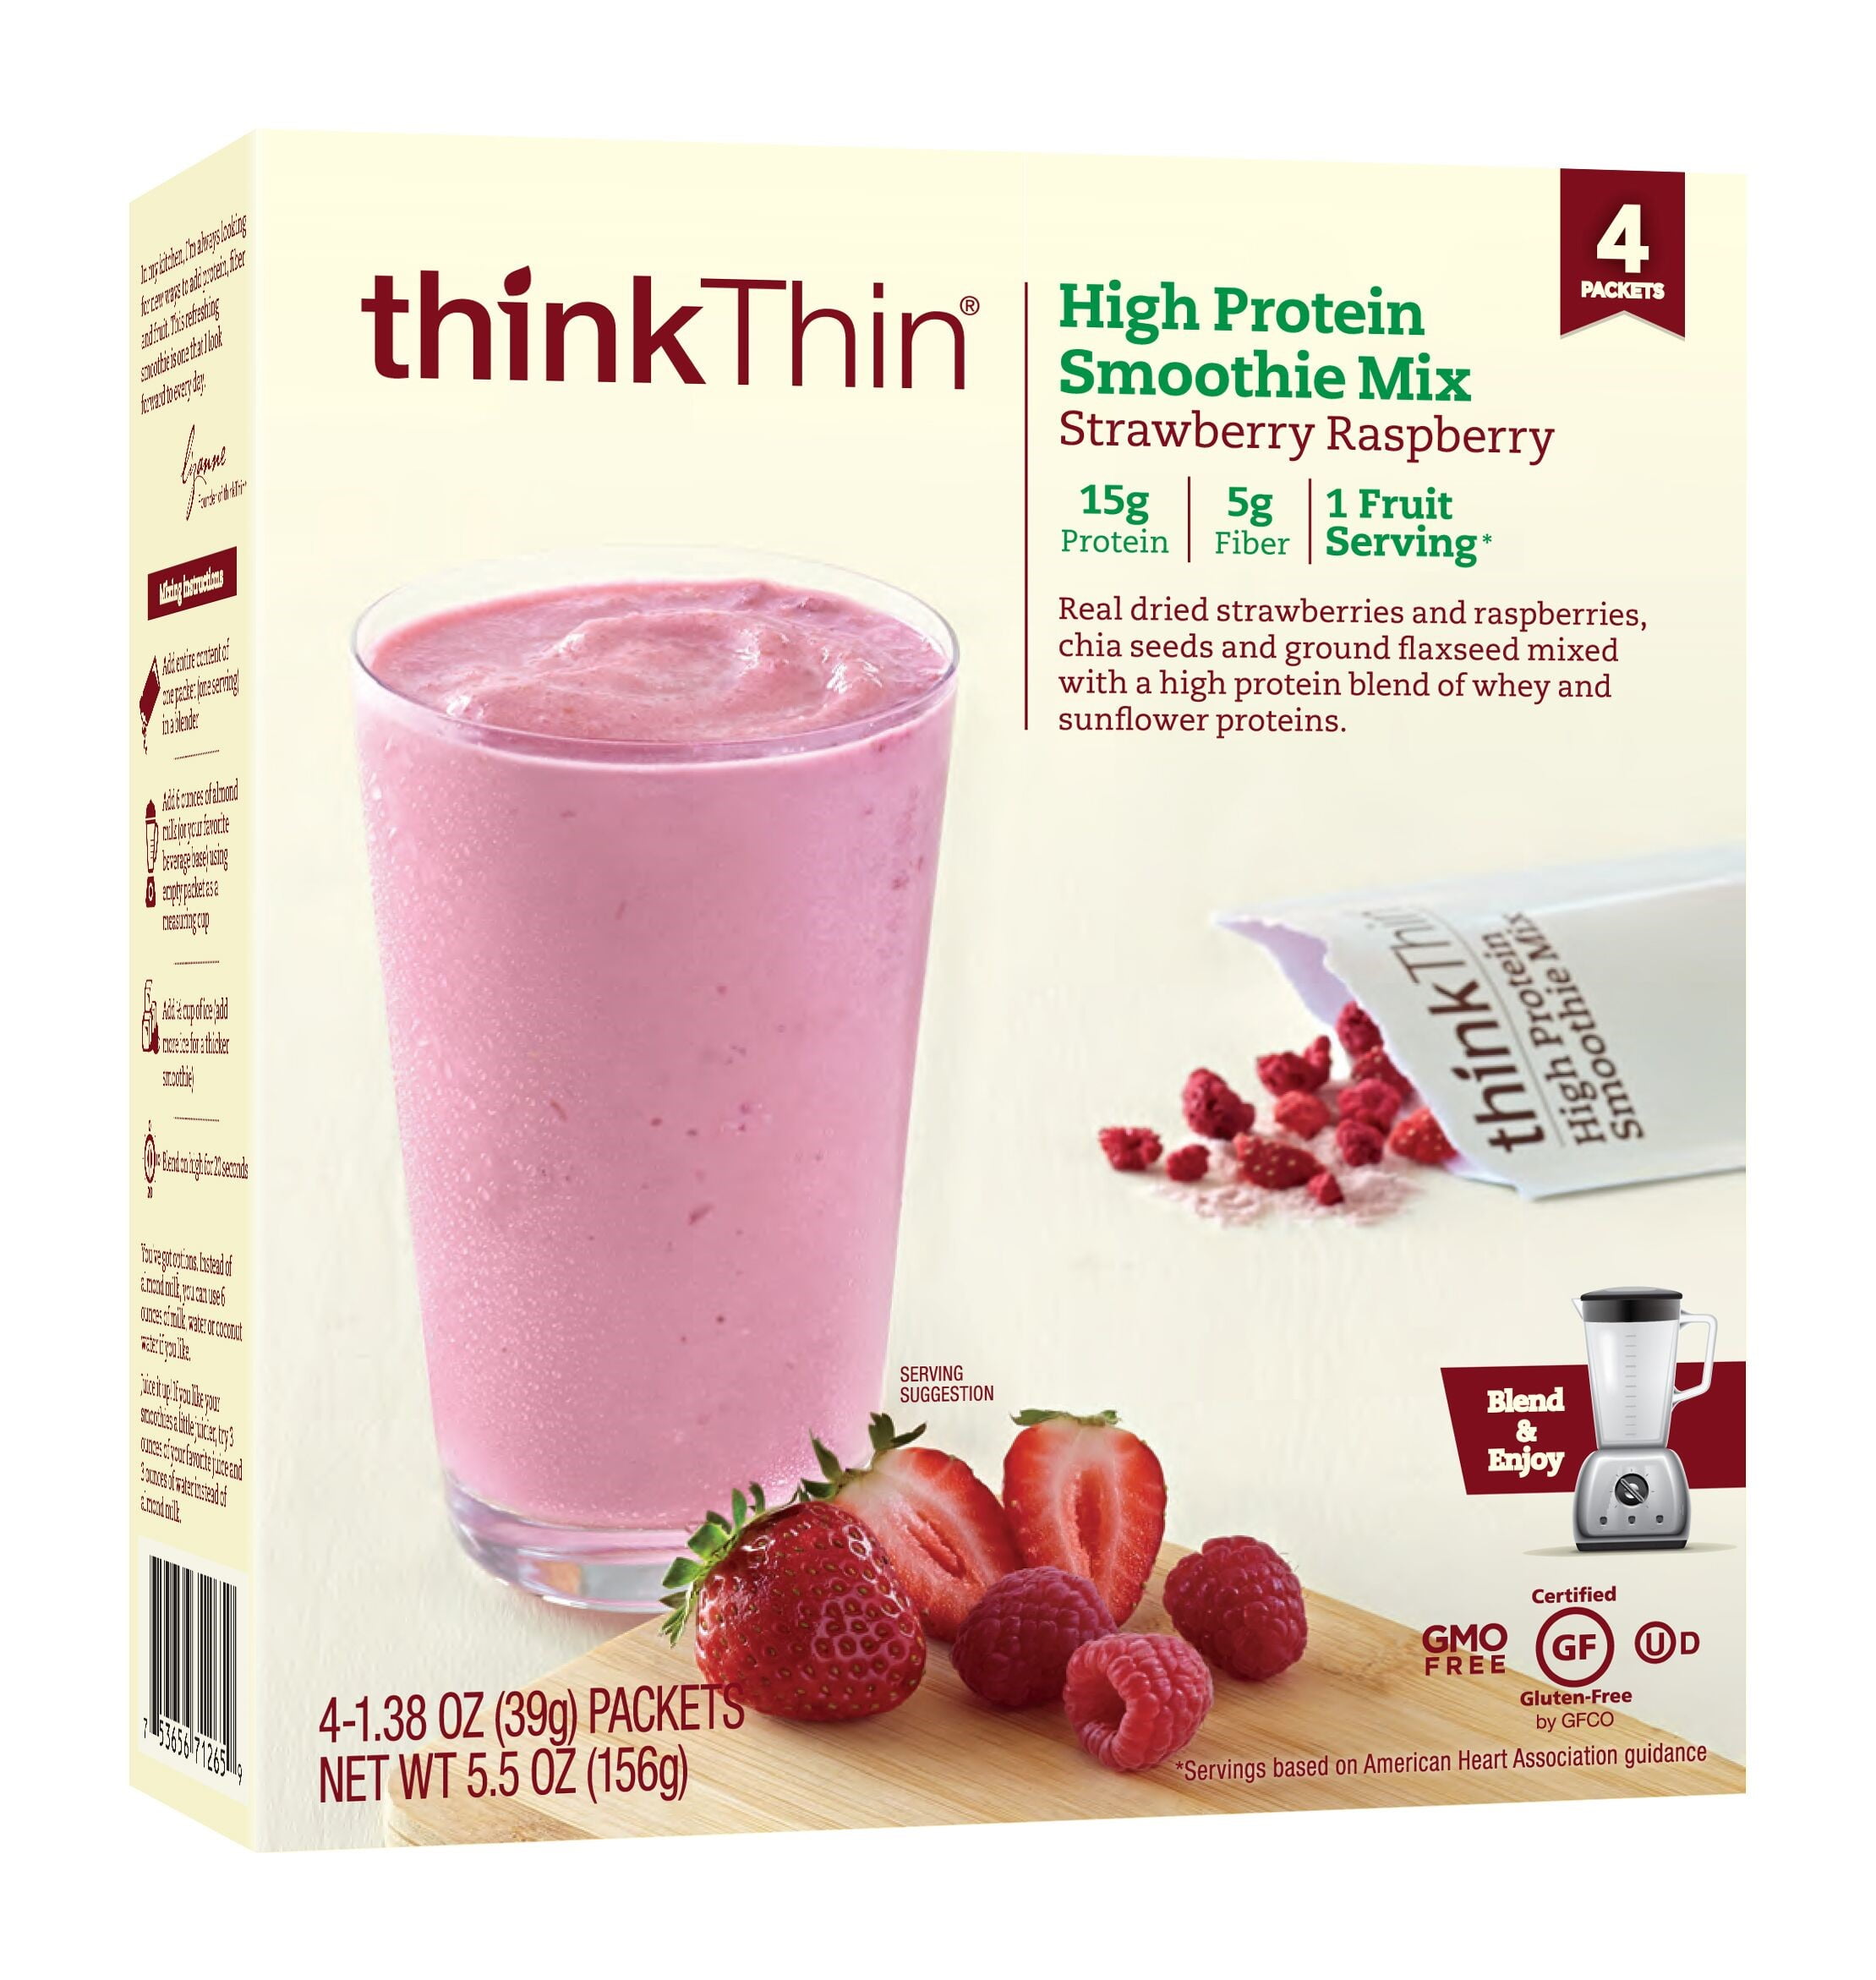 thinkThin High Protein Smoothie Mix, 2016-03-17